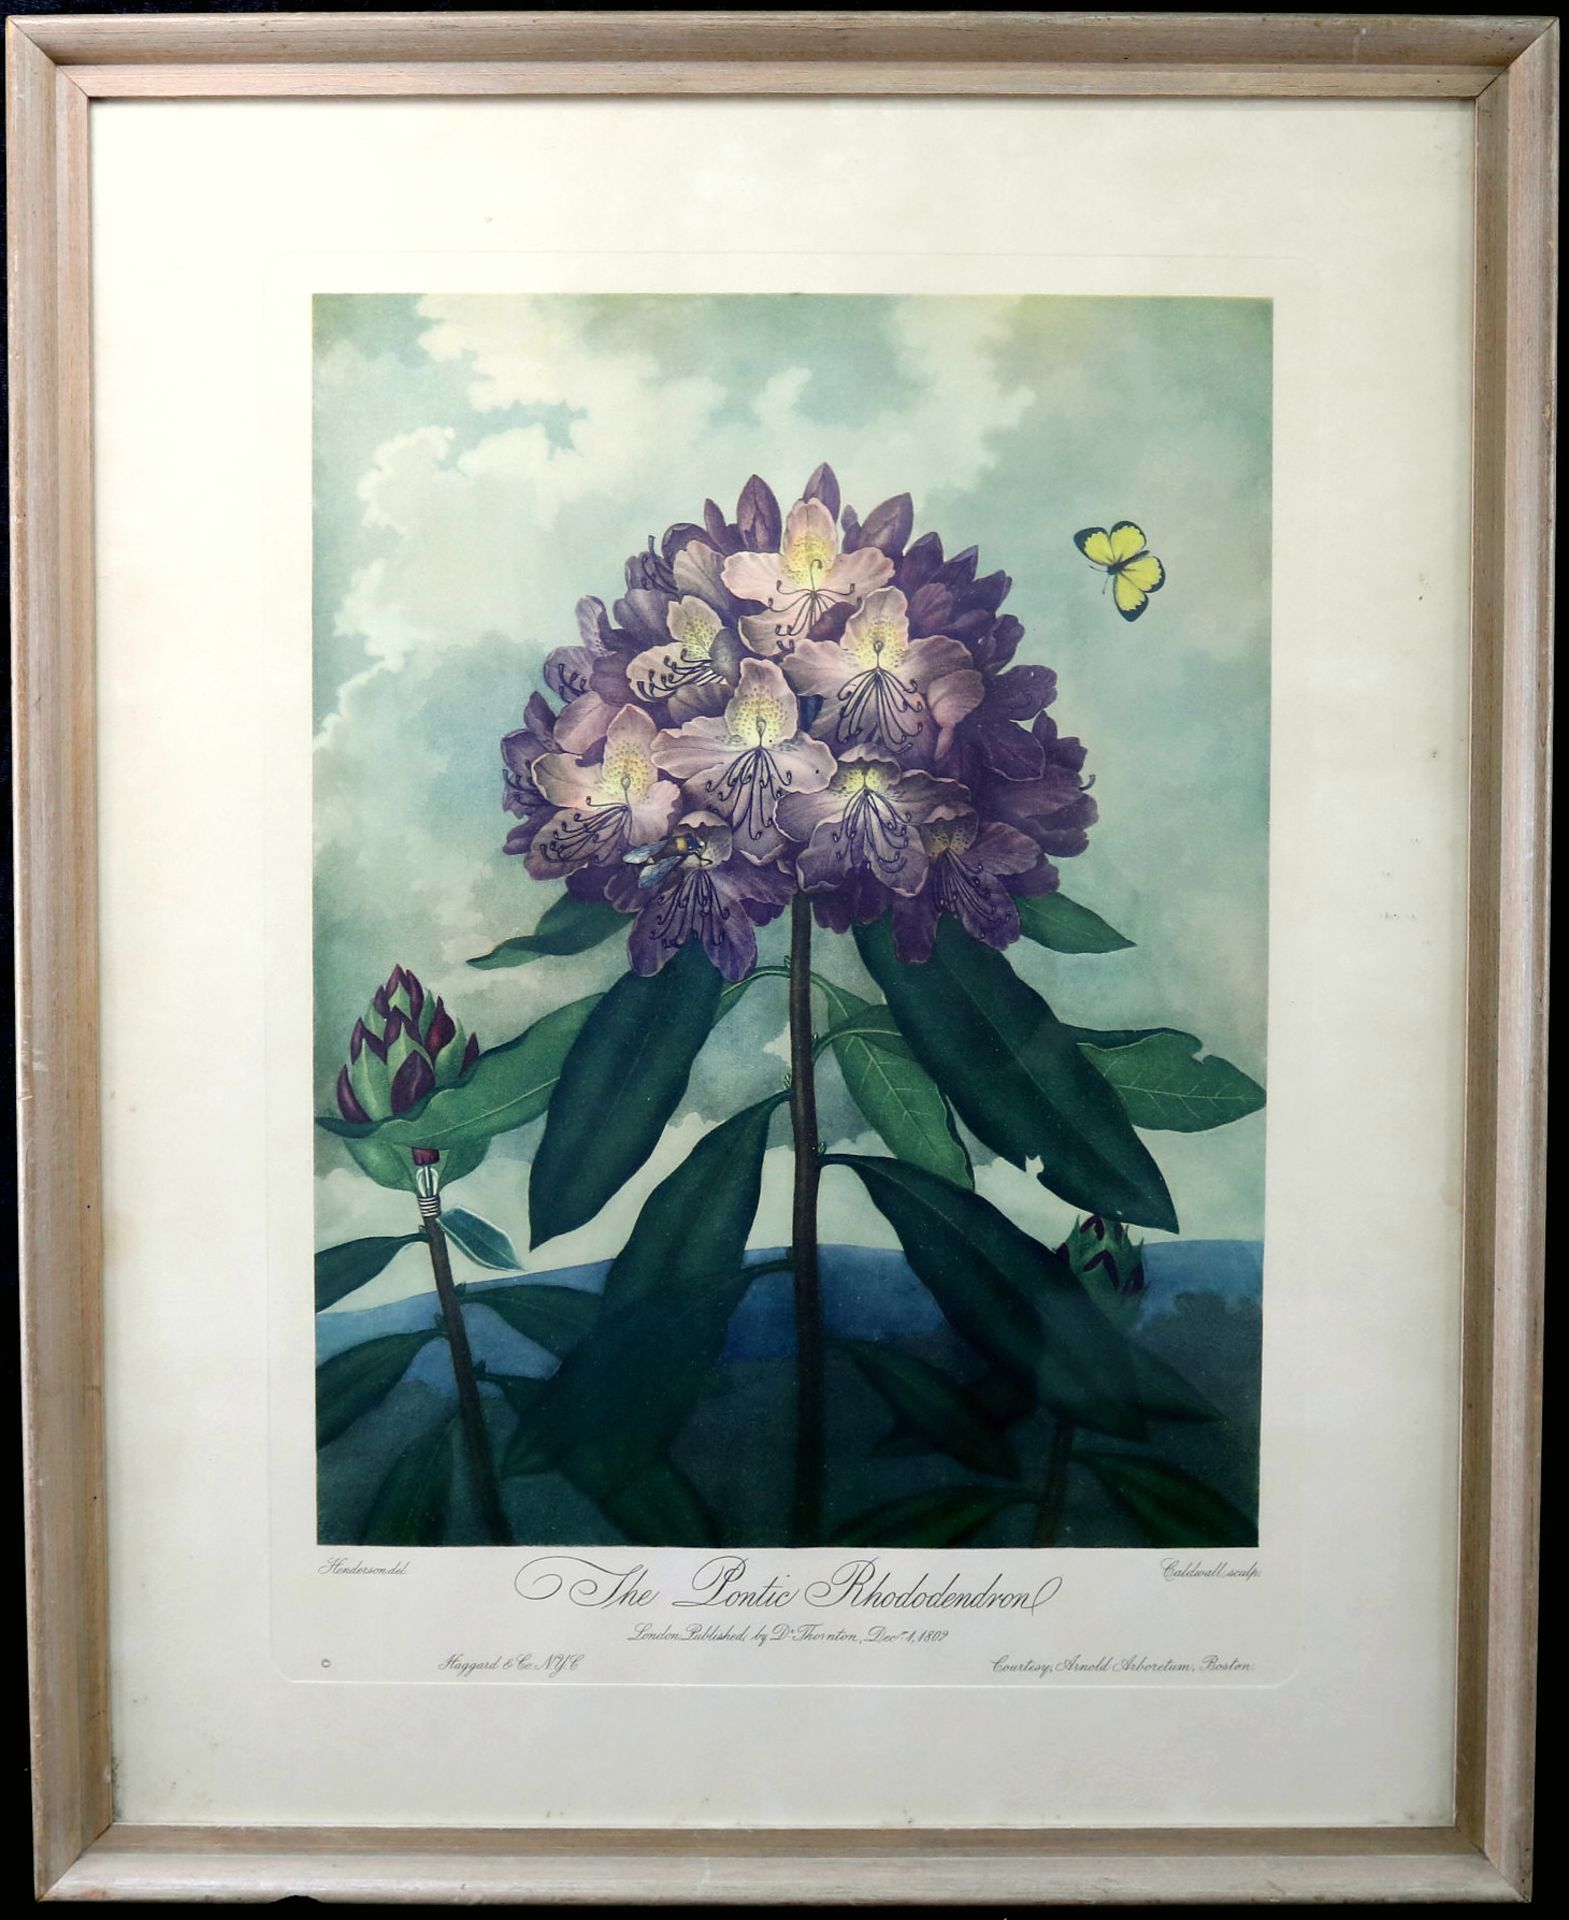 Grafik: Robert John Thornton (*1768-1837) "The Pontic Rhododendron", 20. Jh., 49 x 36 cm